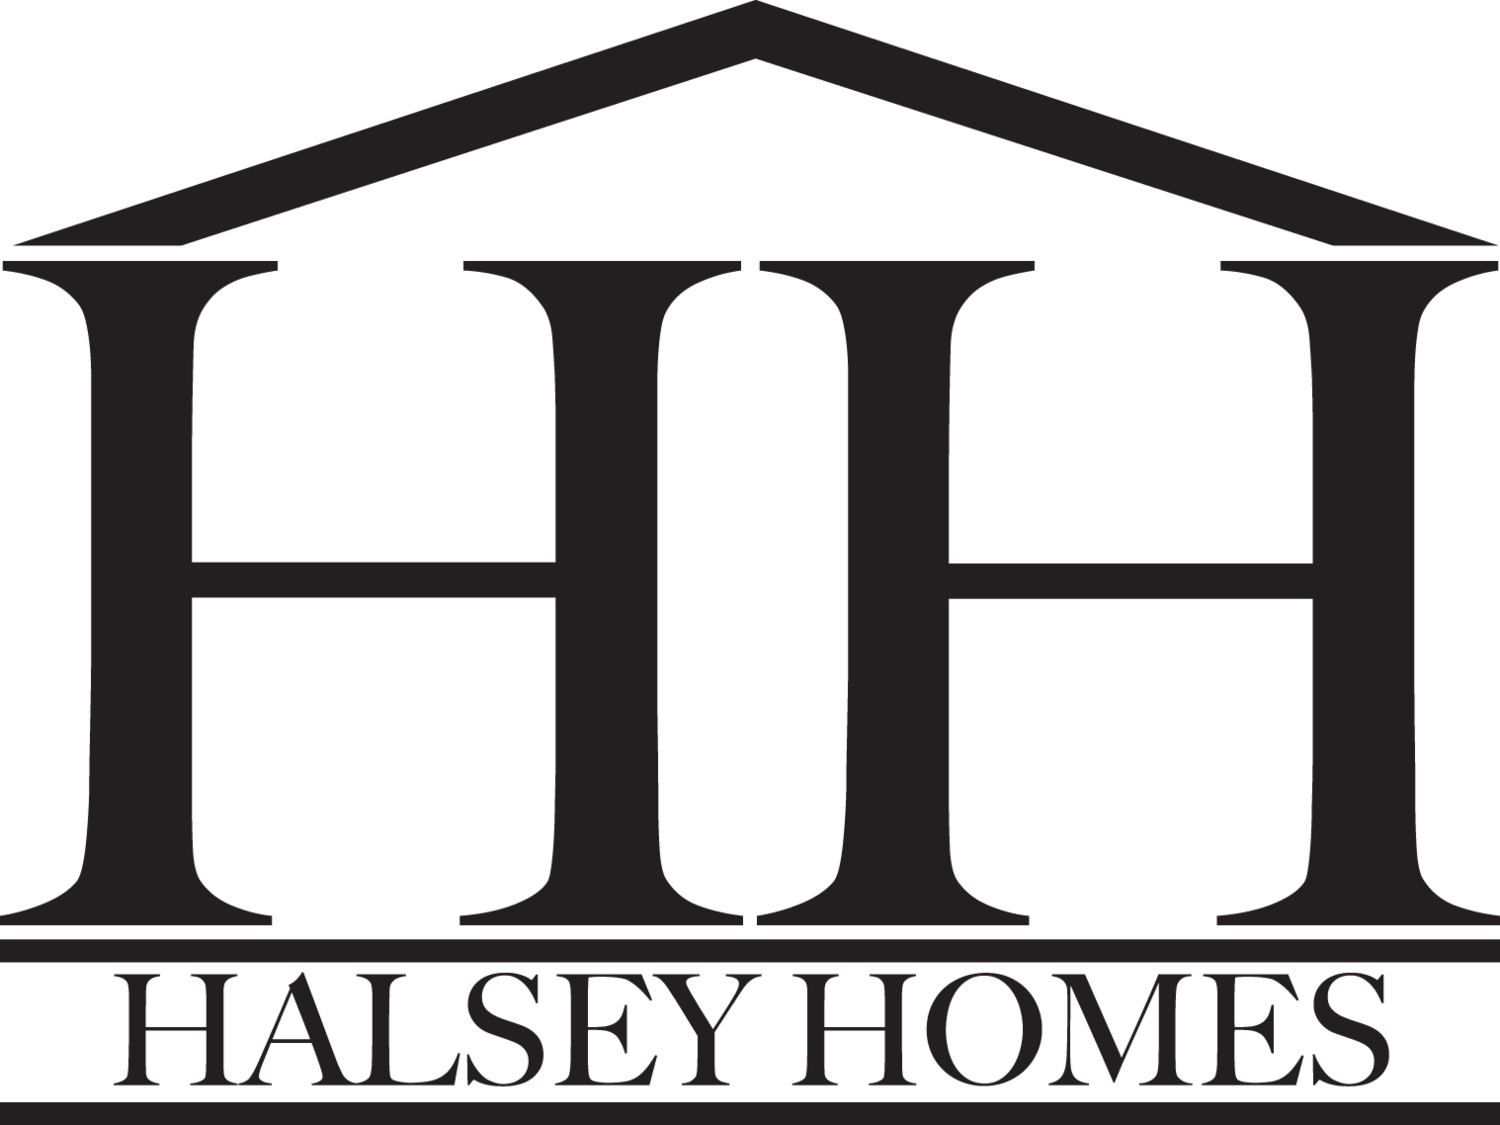 Halsey Home Corporation